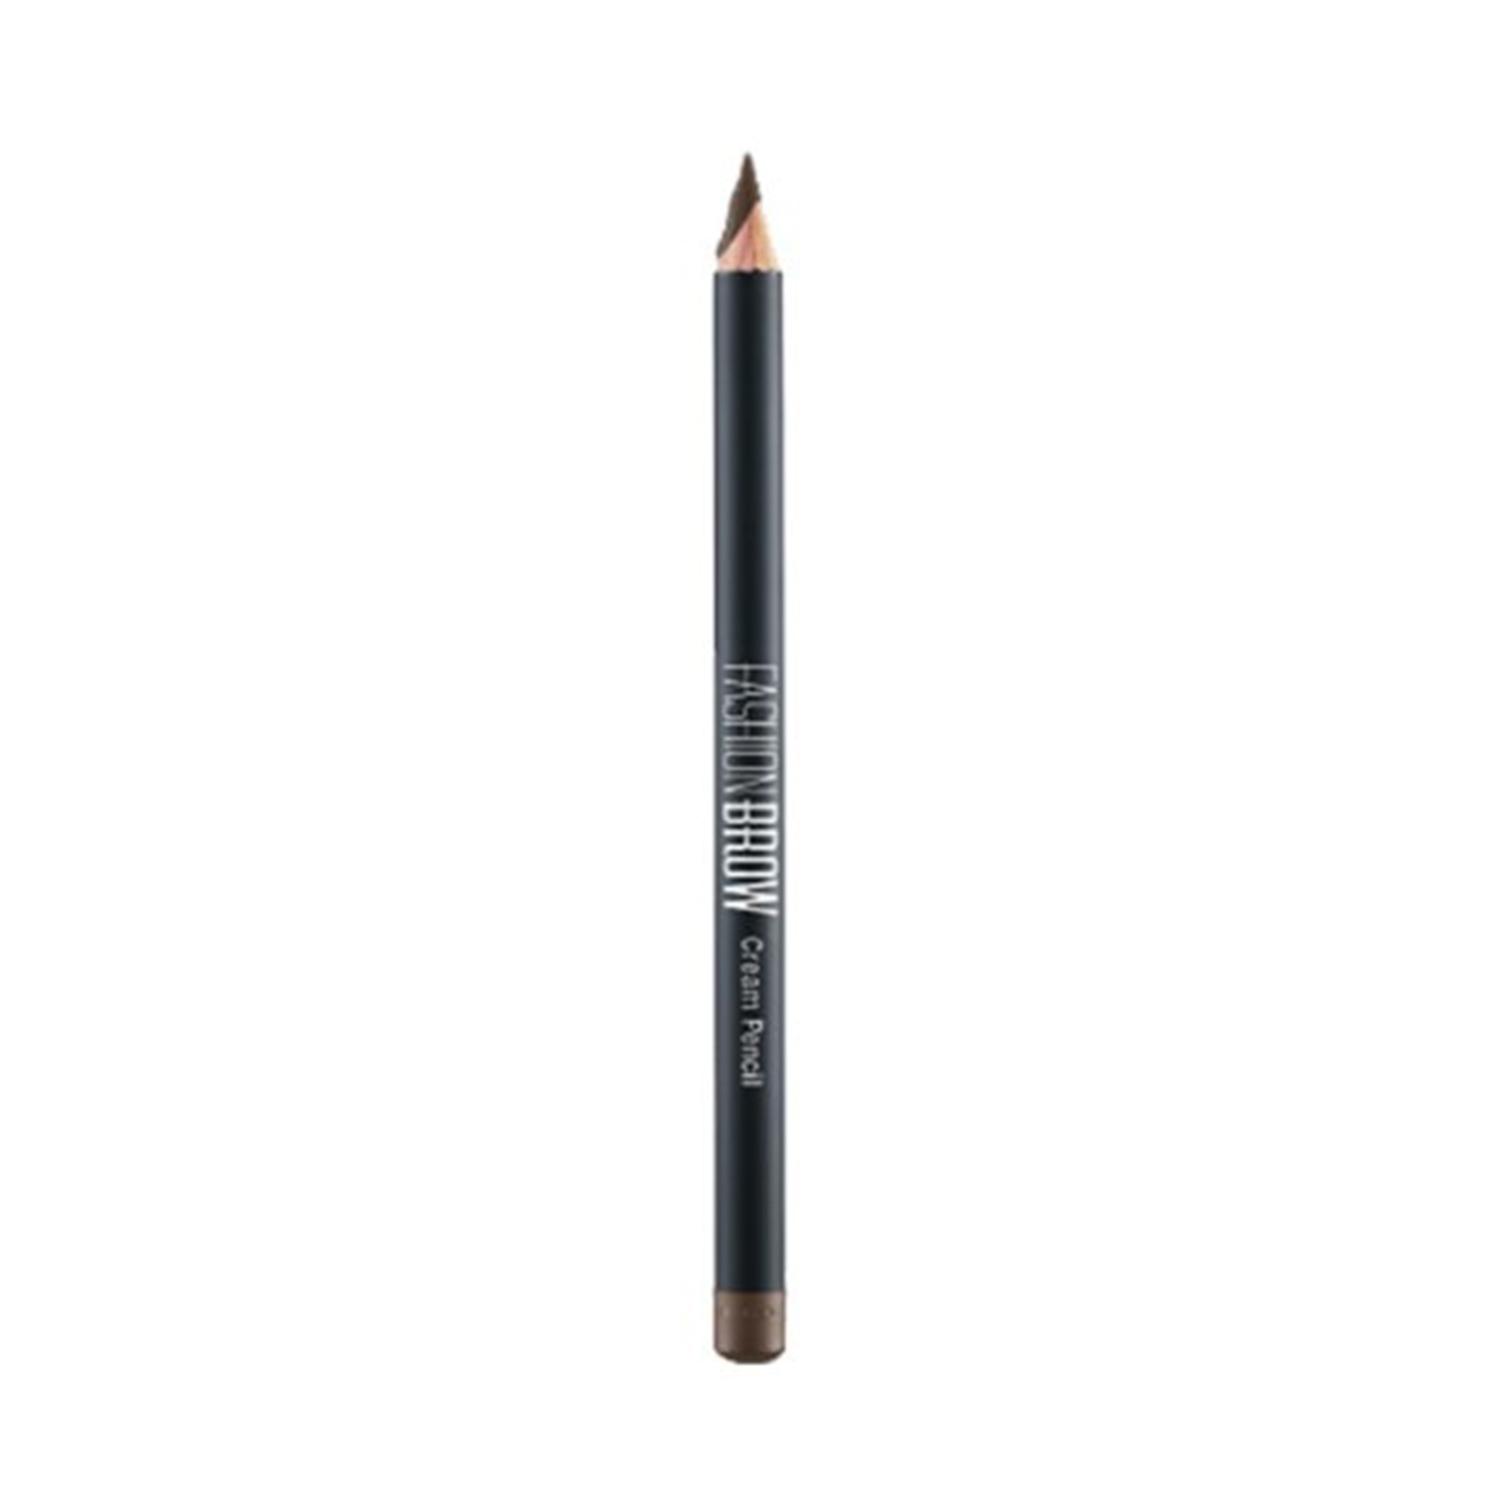 maybelline new york fashion brow cream pencil - dark brown (0.78g)